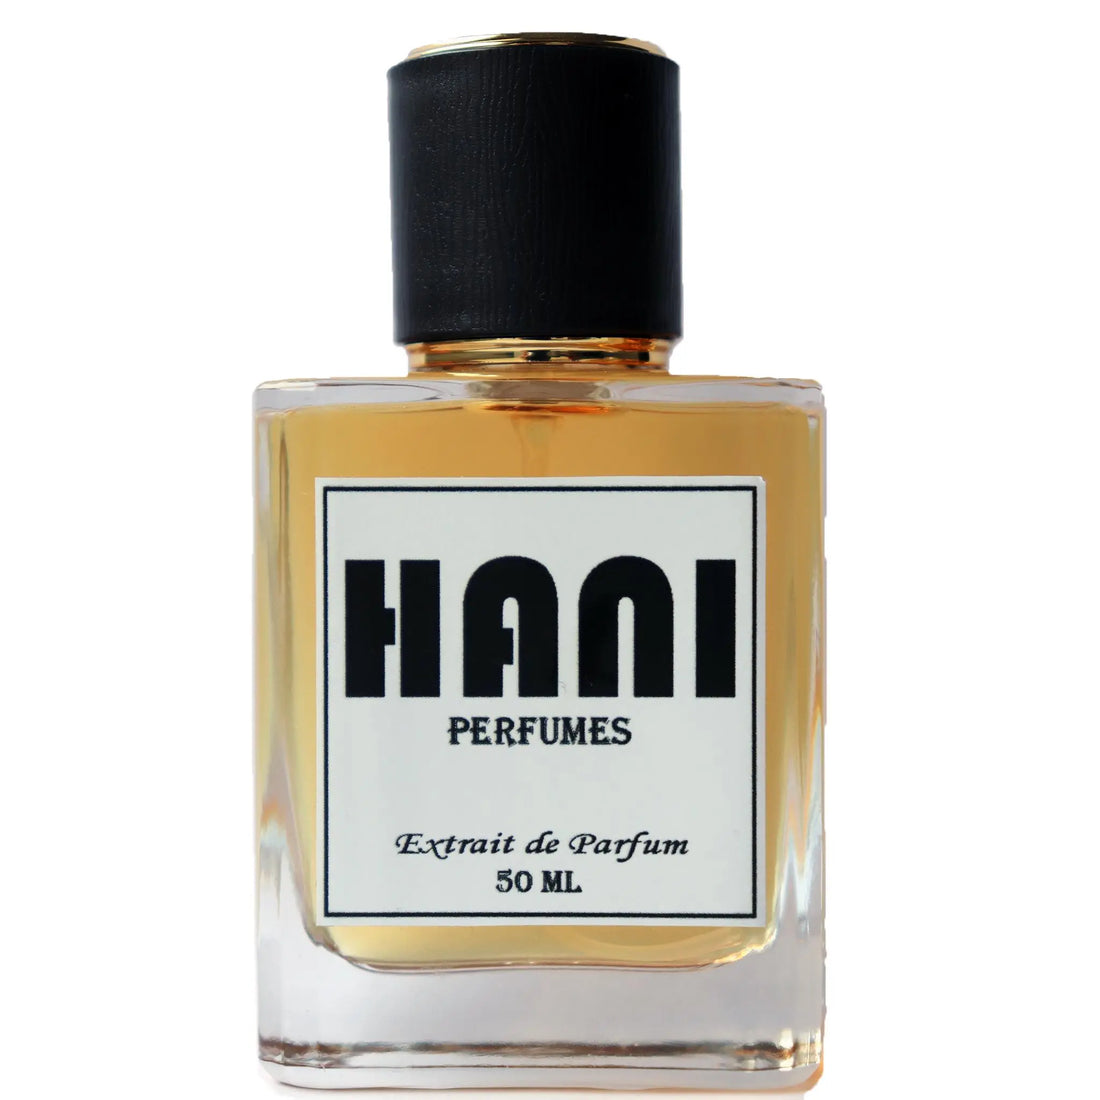 Der-beste-Moschus-Duft-Hani-Weißer-Moschus Hani Perfumesduftzwillinge parfum dupe zwilling duftzwilling